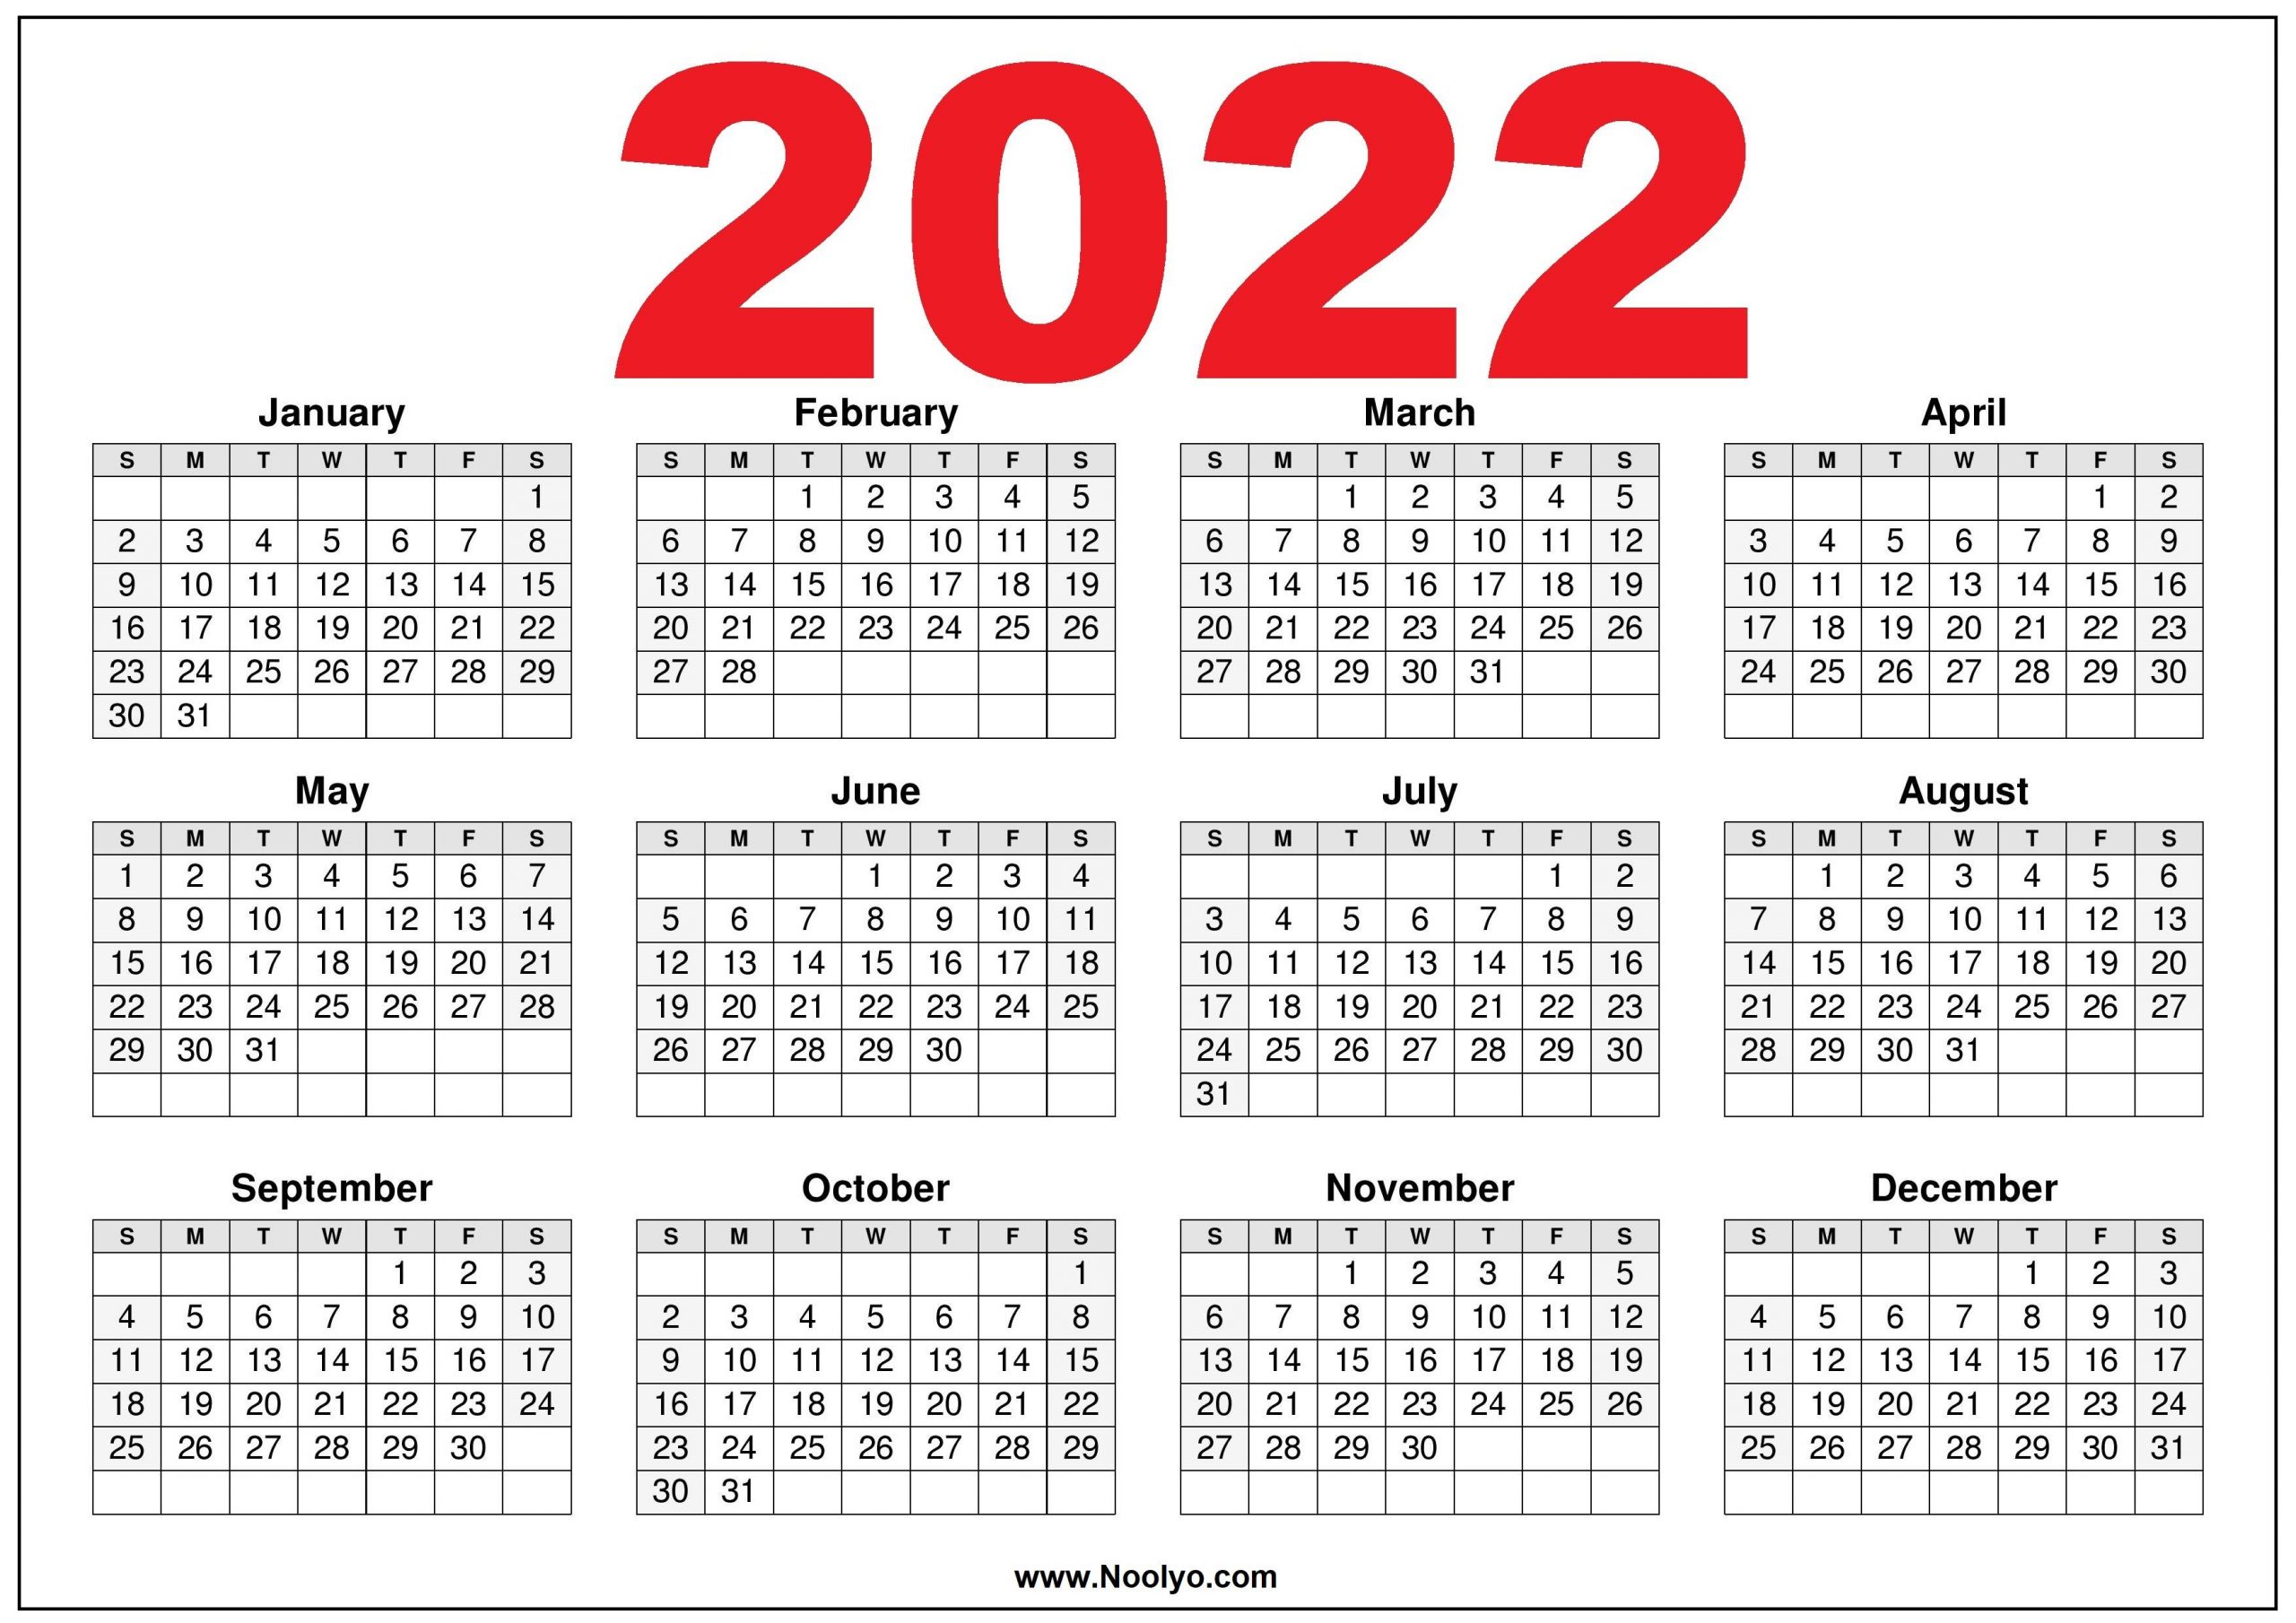 2022 Calendar Printable Us - Download Free - Noolyo